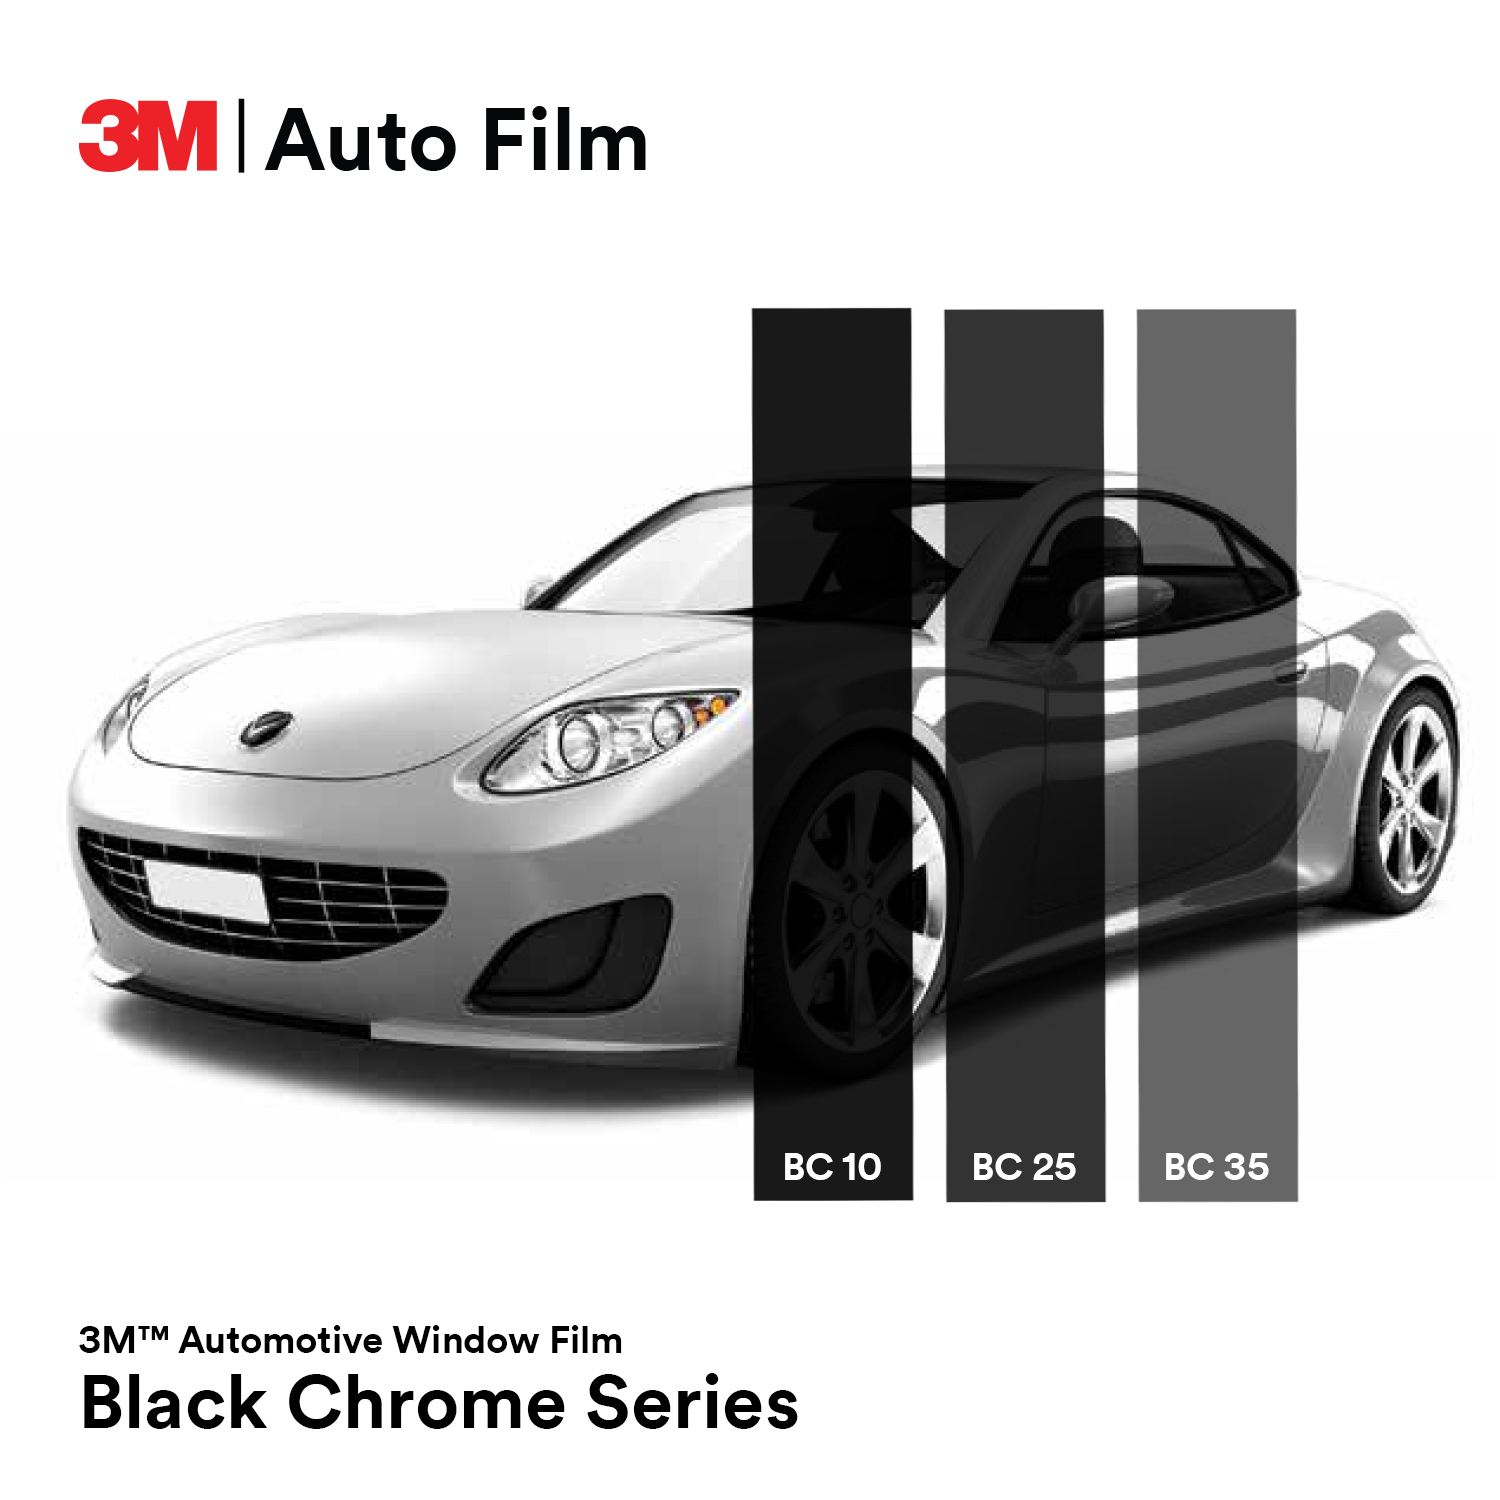 3M™ Automotive Window Film Black Chrome Series